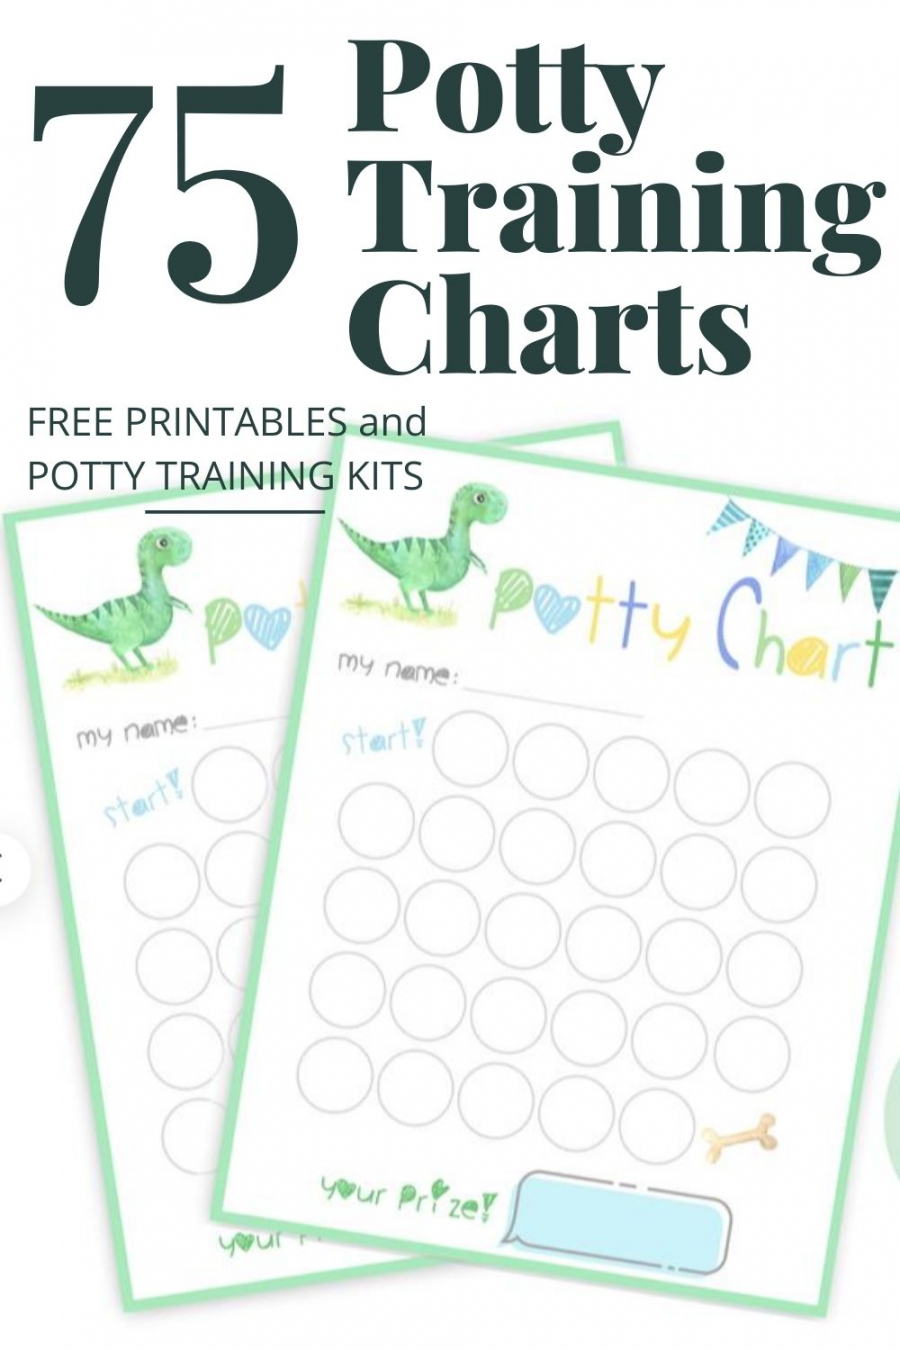 Free Printable Potty Training Charts for Boys & Girls - FREE Printables - Free Potty Training Chart Printable